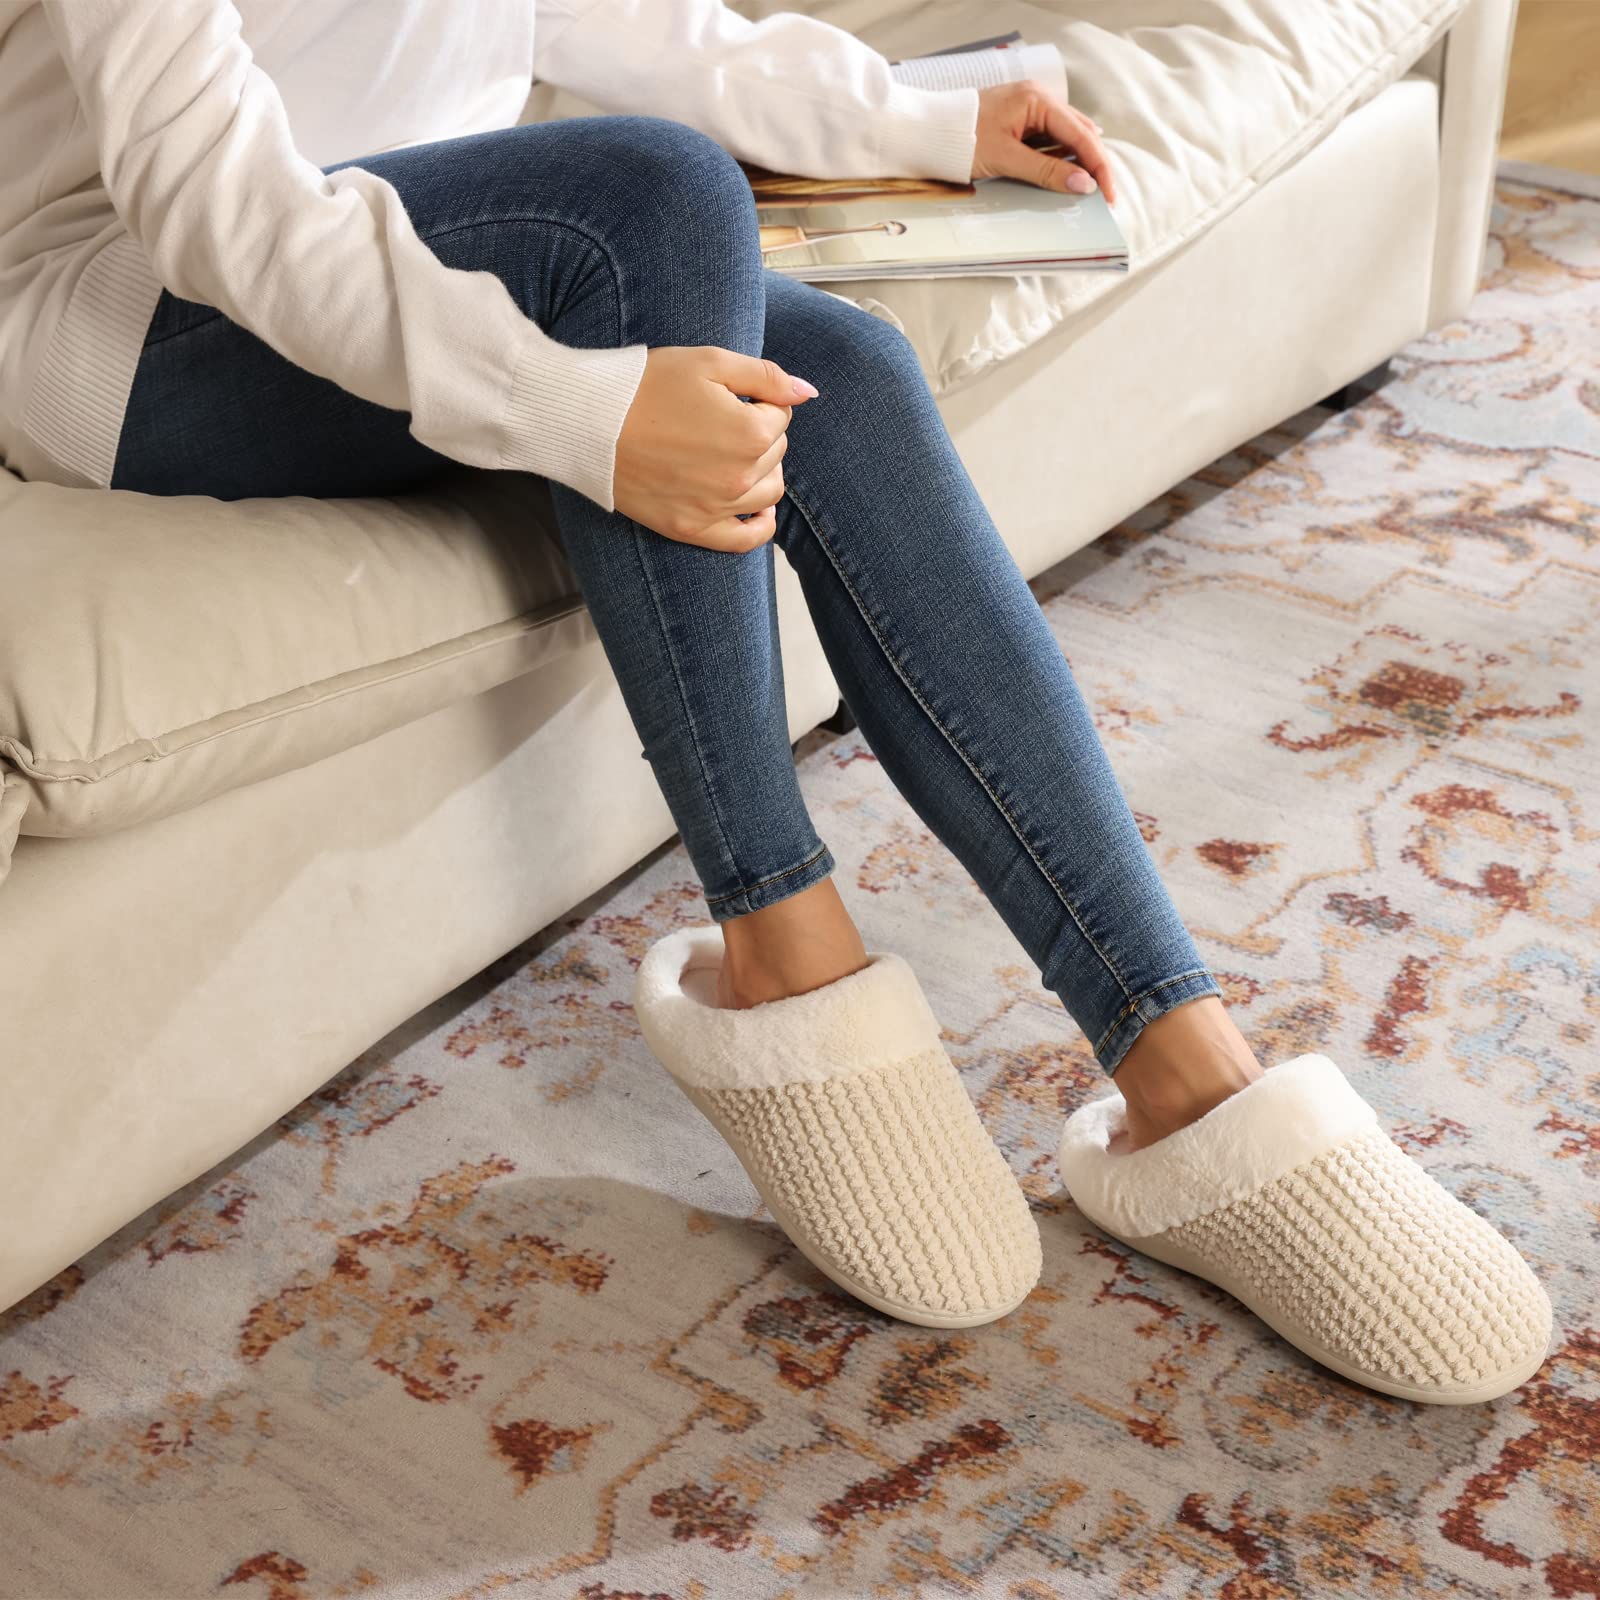 Women's Memory Foam Slippers Comfort Wool-Like Plush Fleece Lined House Shoes for Indoor & Outdoor